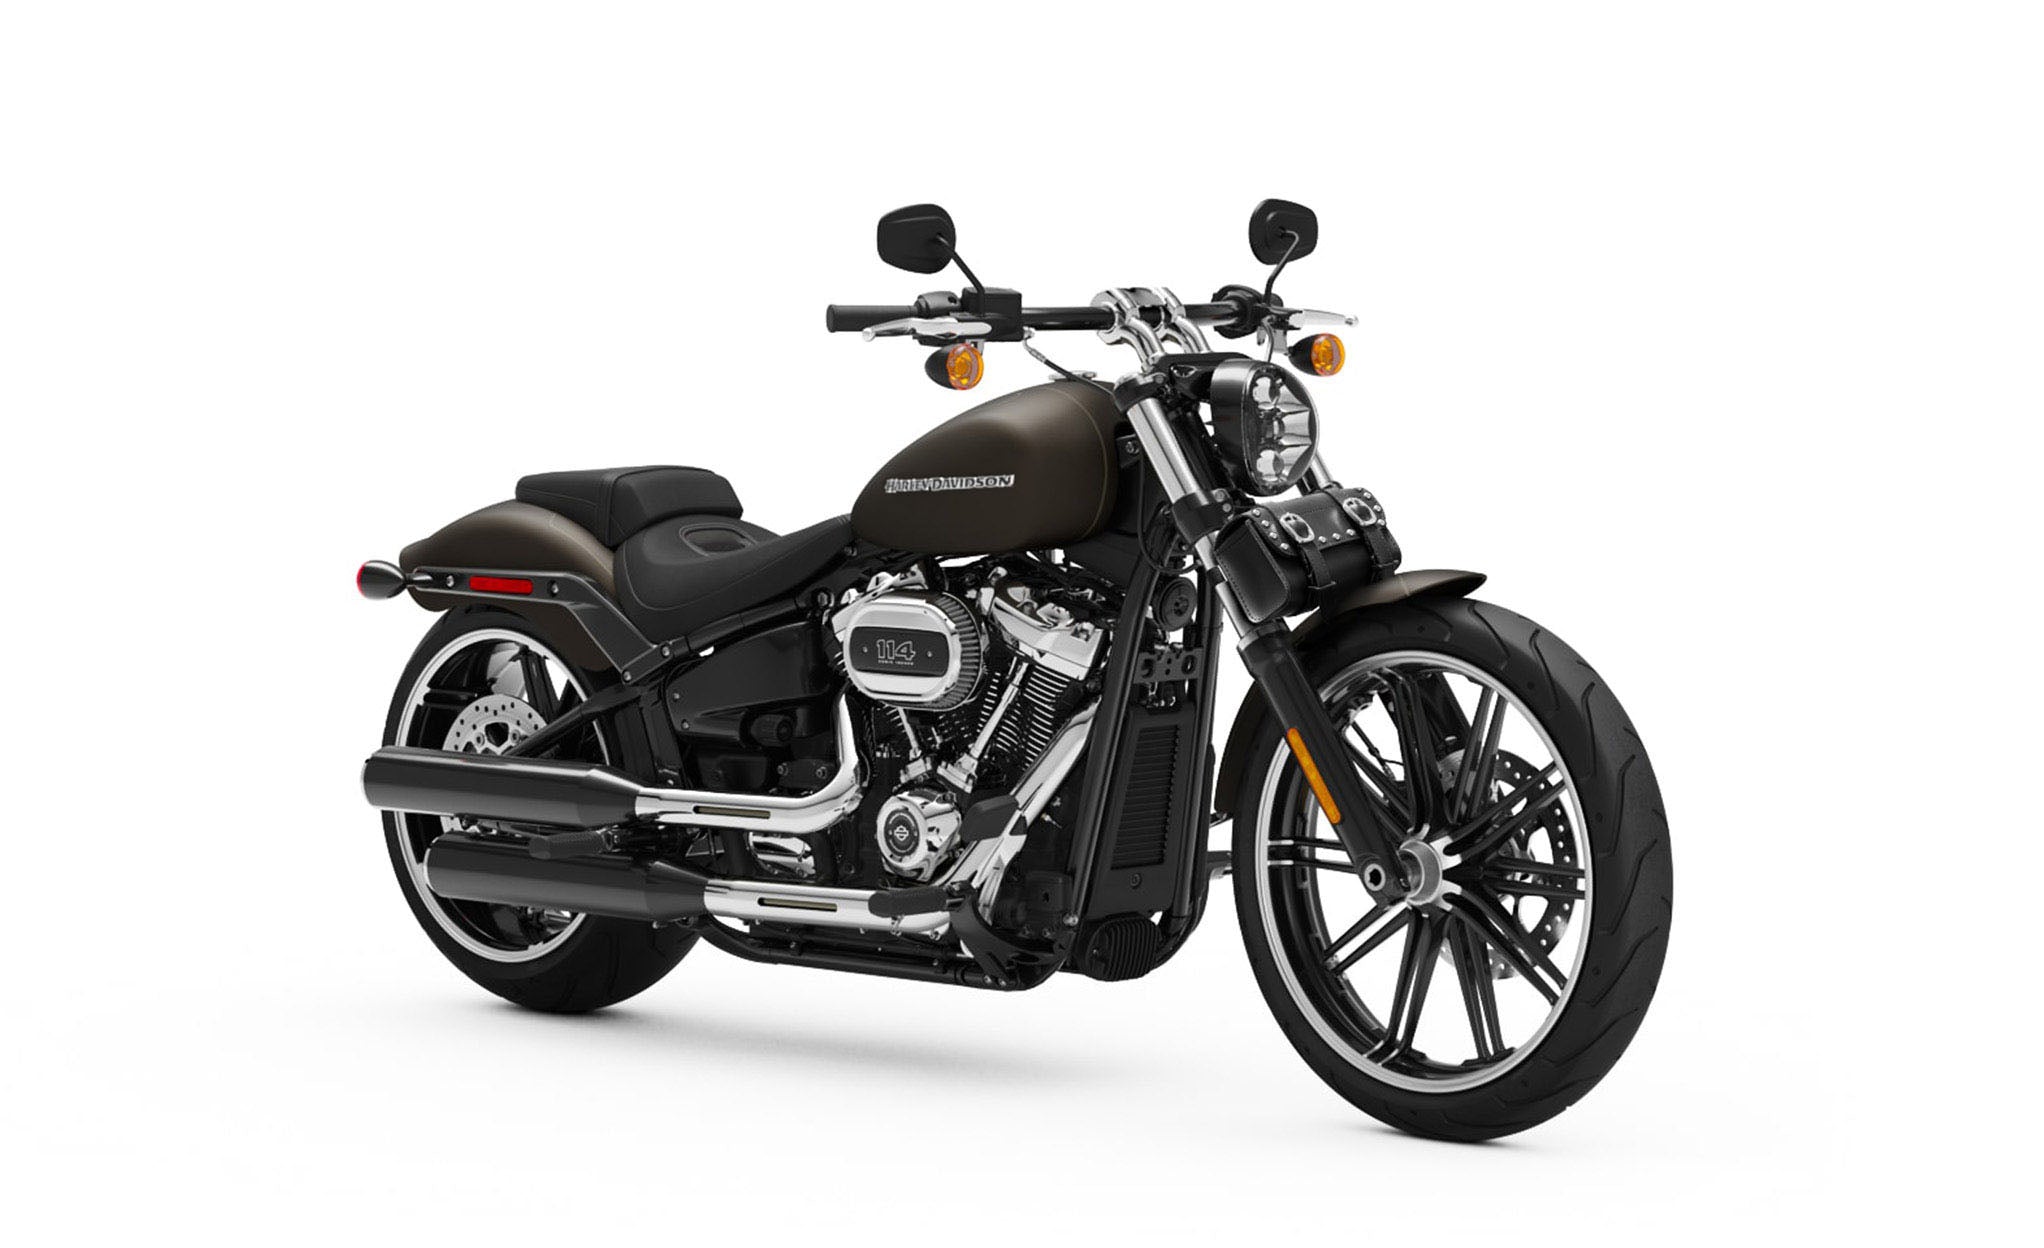 Viking Armor Studded Leather Motorcycle Fork Bag for Harley Davidson Bag on Bike View @expand